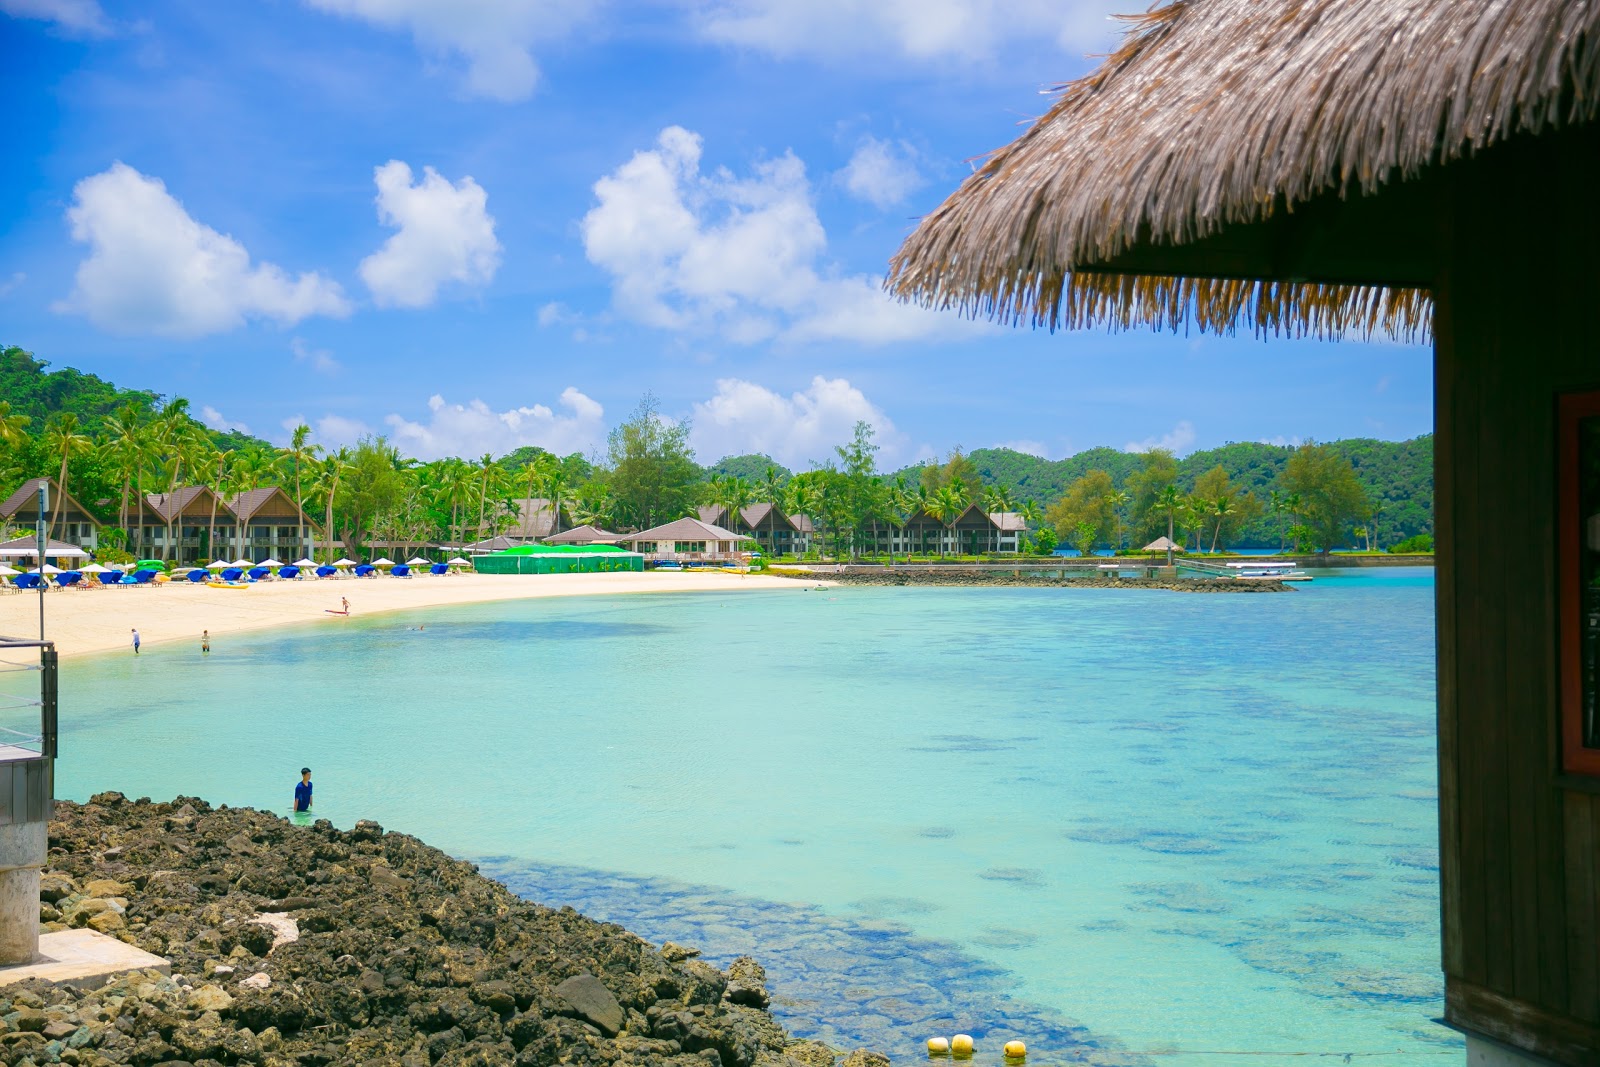 Foto van Palau Pacific Resort met ruim strand